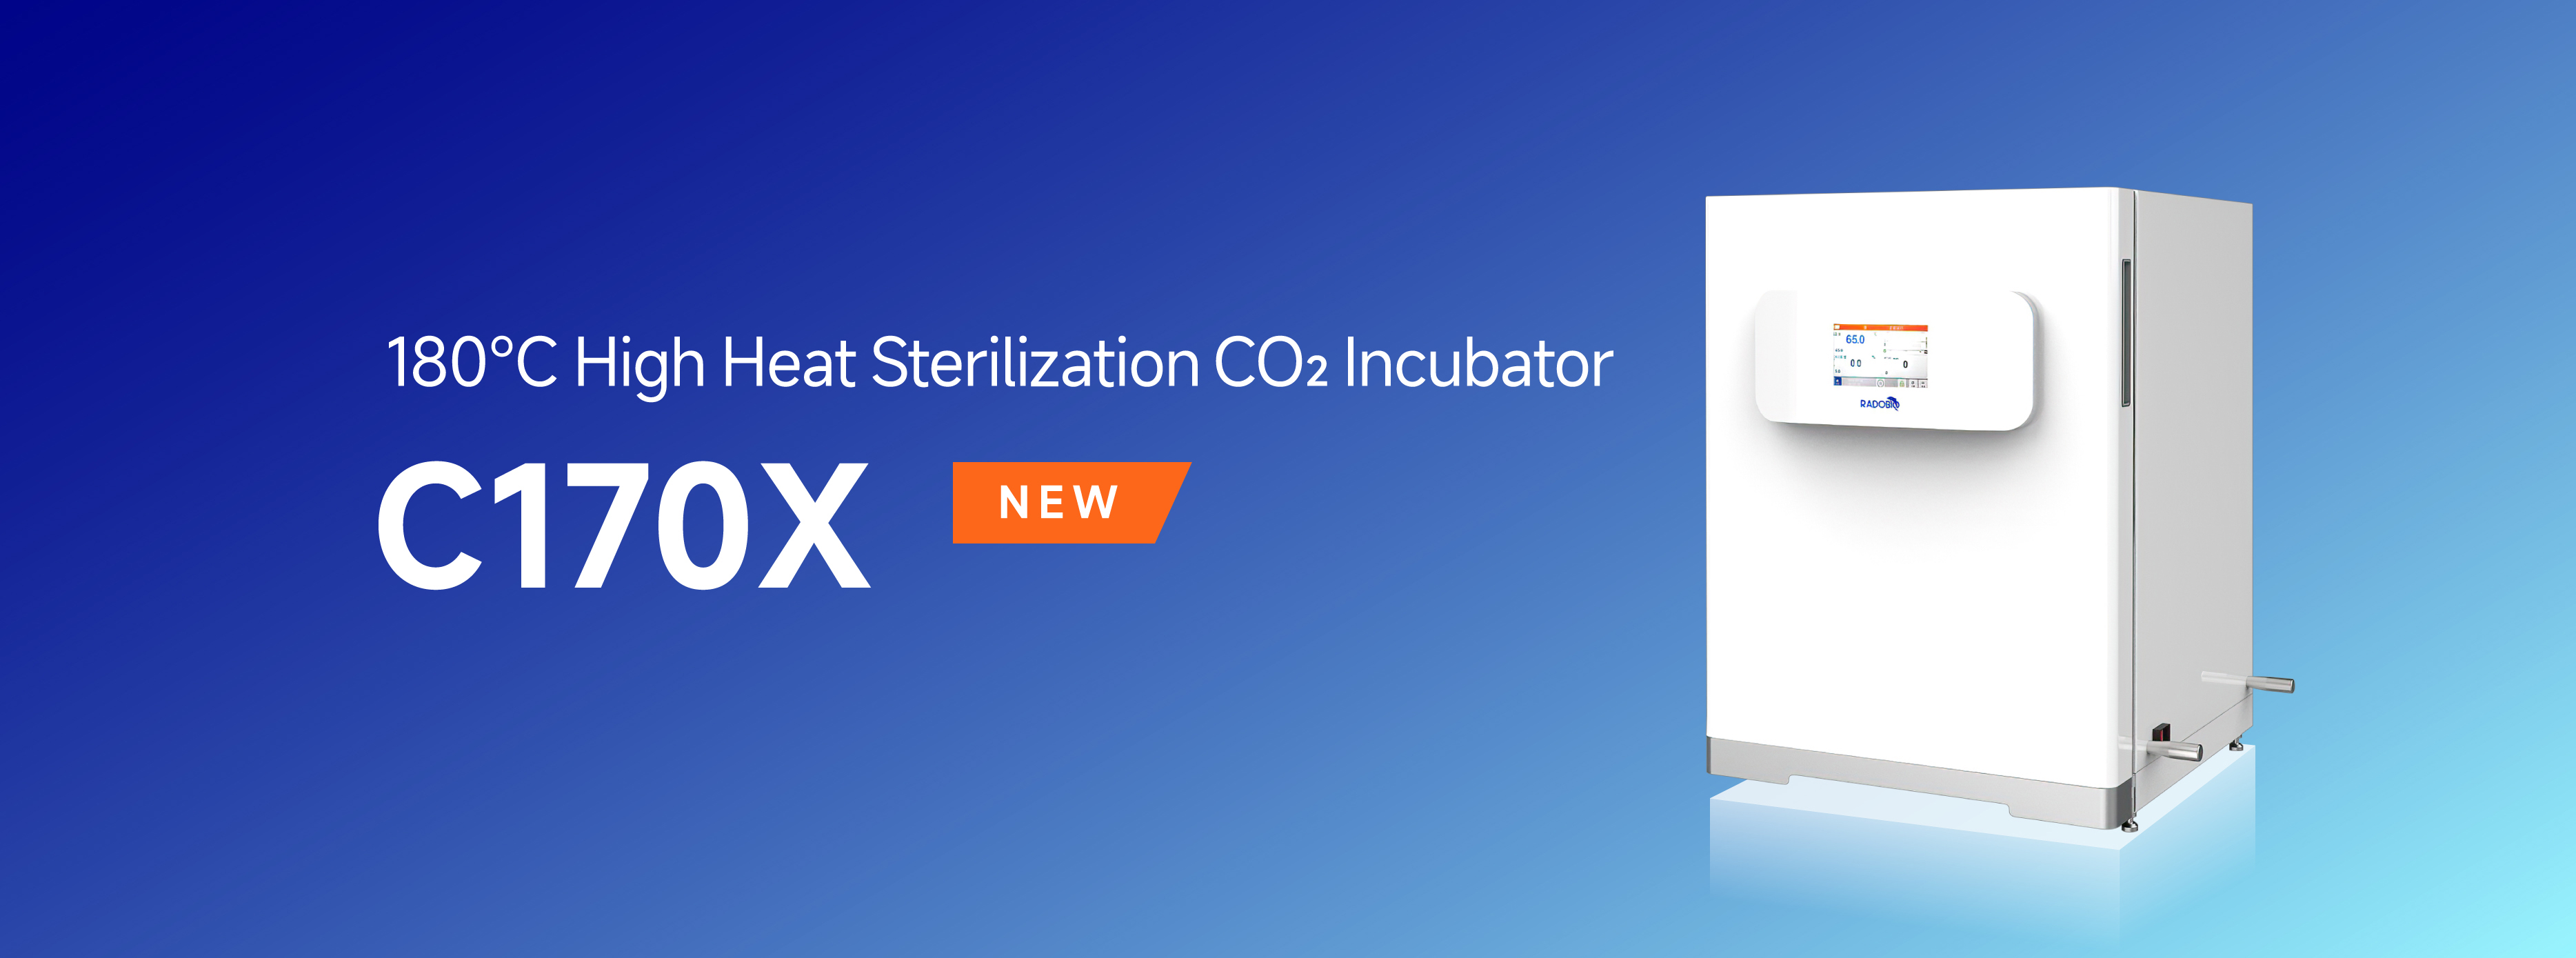 c170x co2 incubator-banner